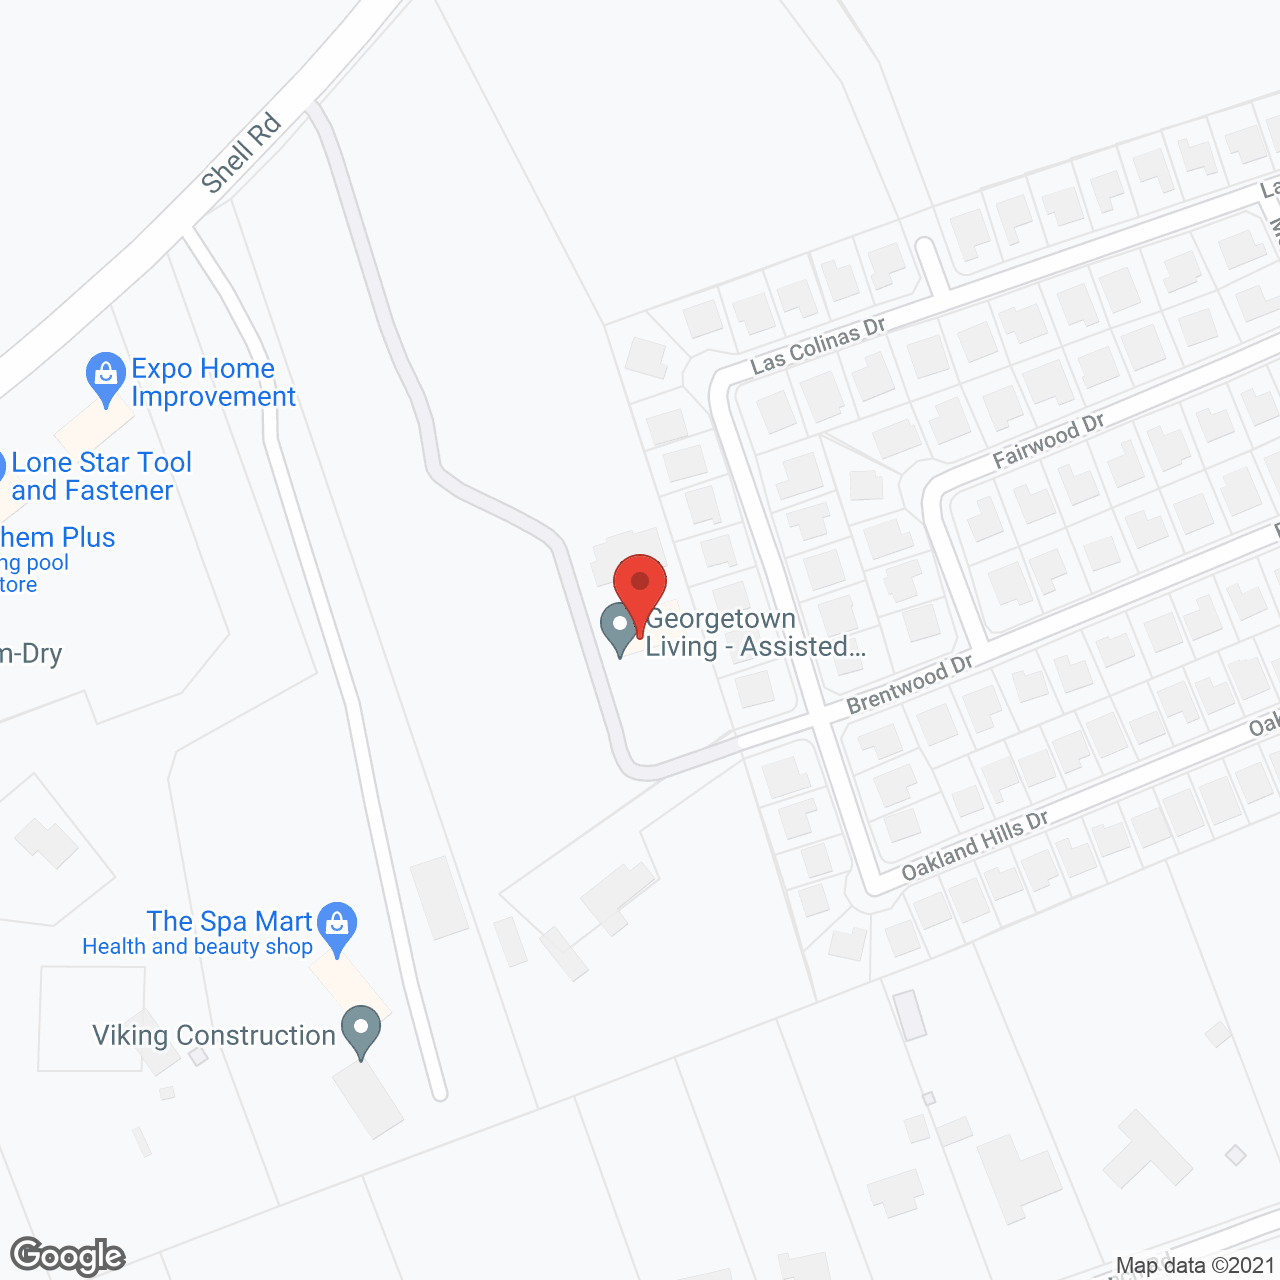 Georgetown Living in google map